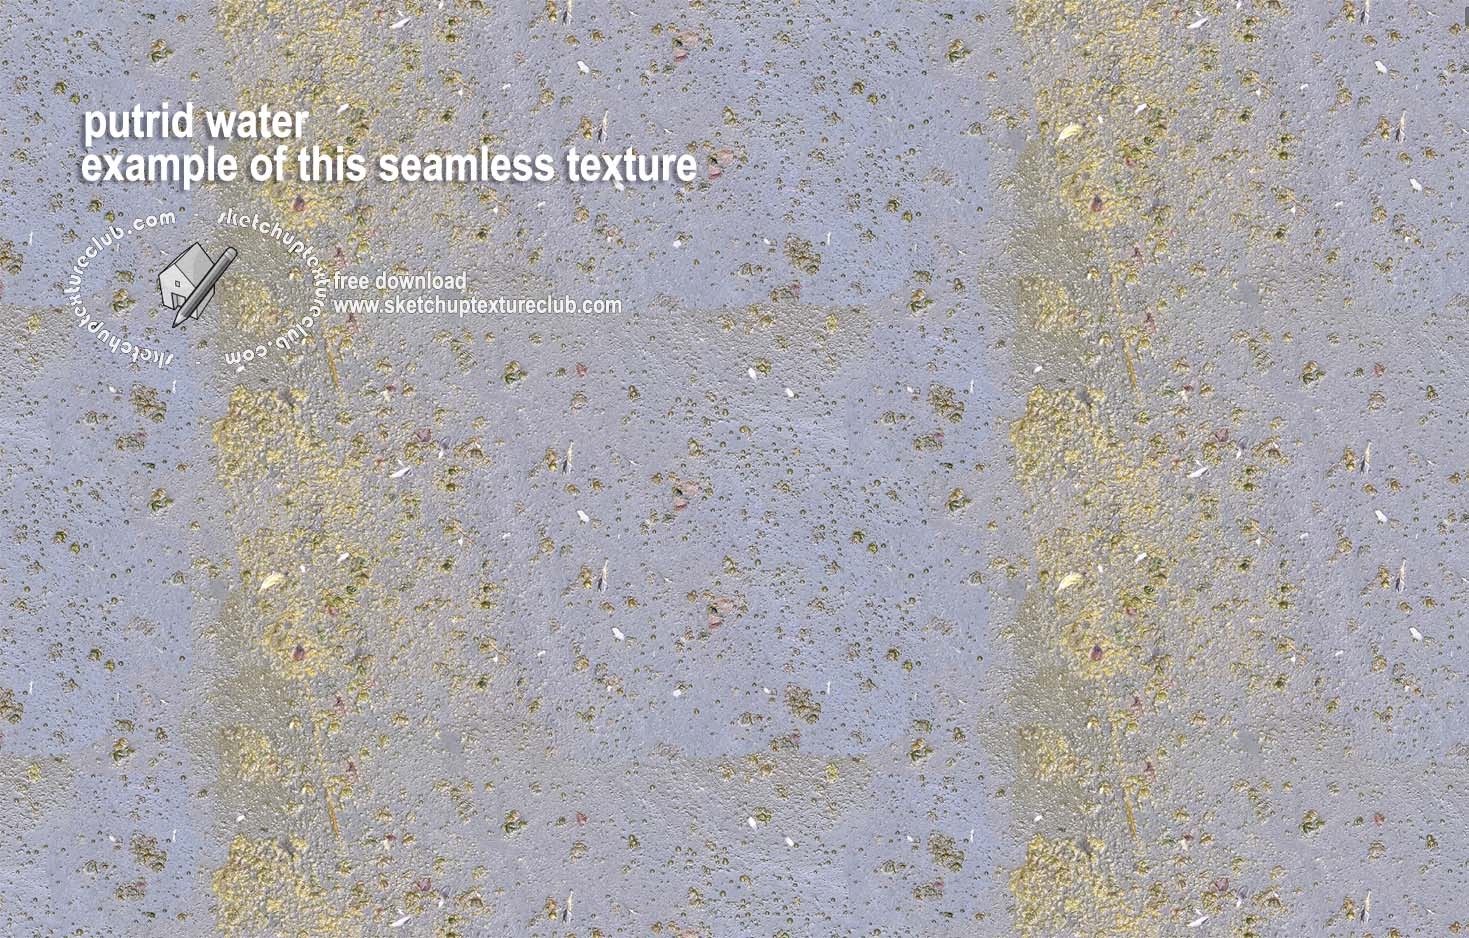 17901 - putrid water seamless texture demo